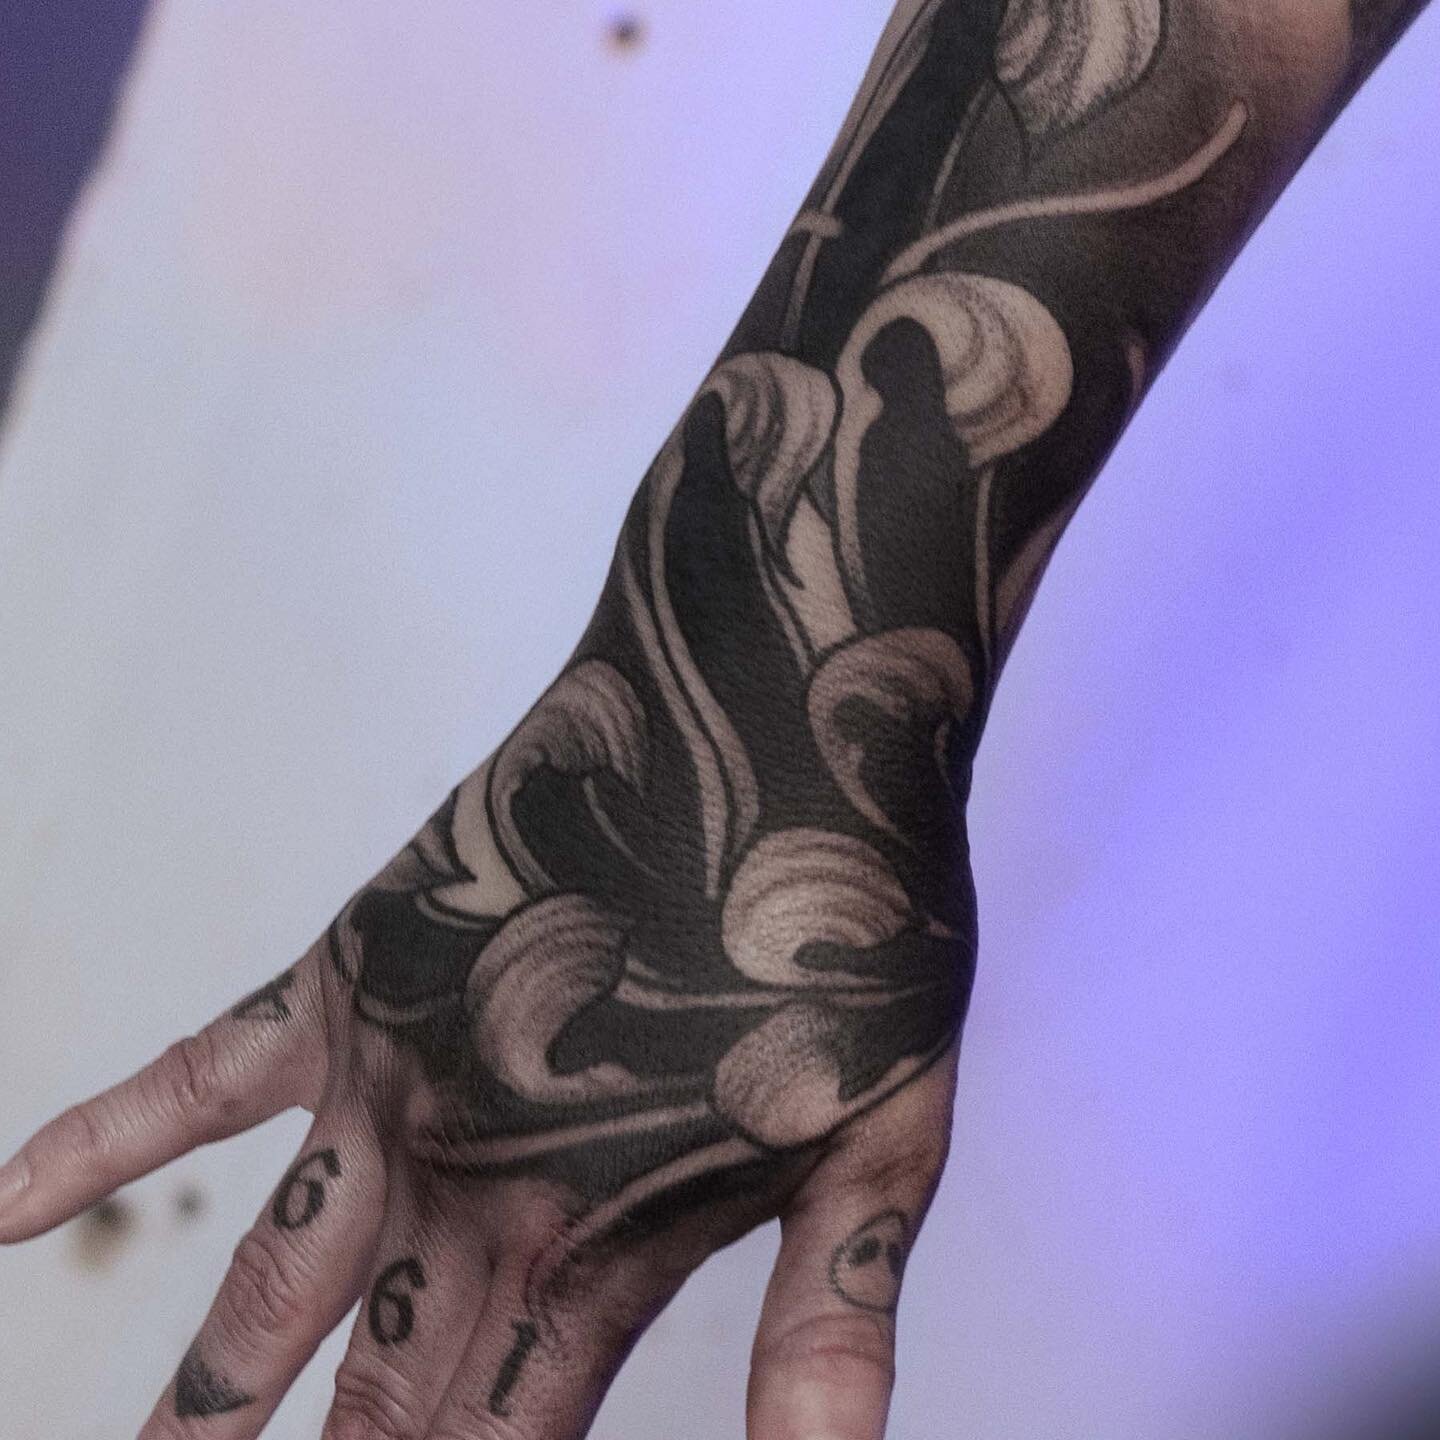 Freehand ornamental hands.
I would love to do more like this ❤️
Enquiries 👇
info@peaches.ink 
Tattooed in @studio_ex_ 

.
#dublintattoo #dublintattooartist #dublintattoostudio #femaletattooartist #freehandtattoo #blackwork #irishinkers #irishtattooa